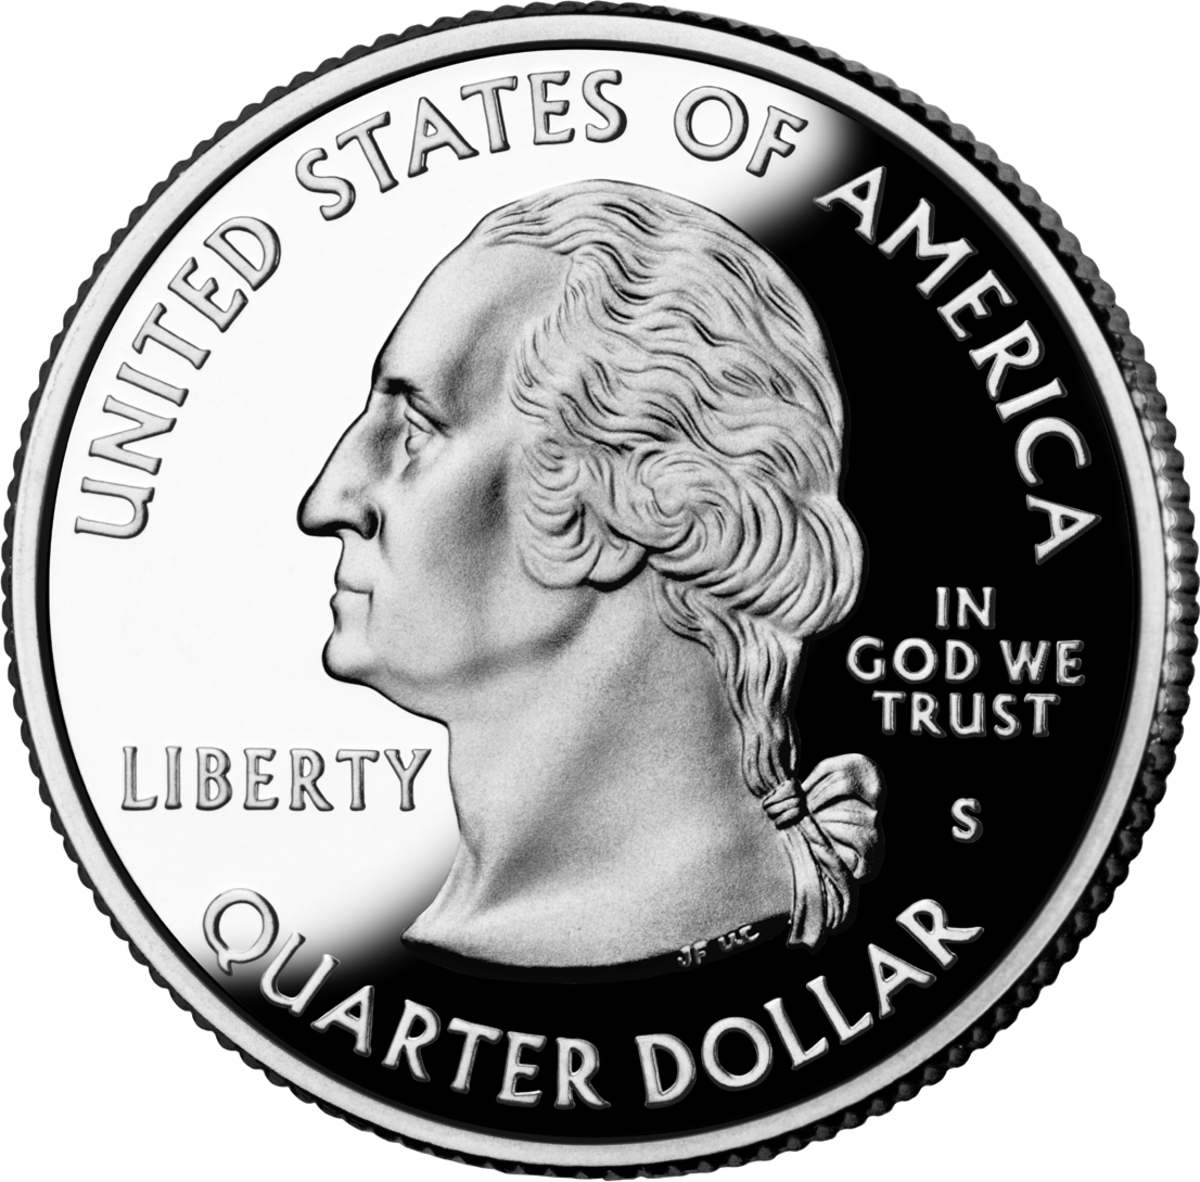 U. S. Mint - Image of George Washington - 2004 Proof Coin